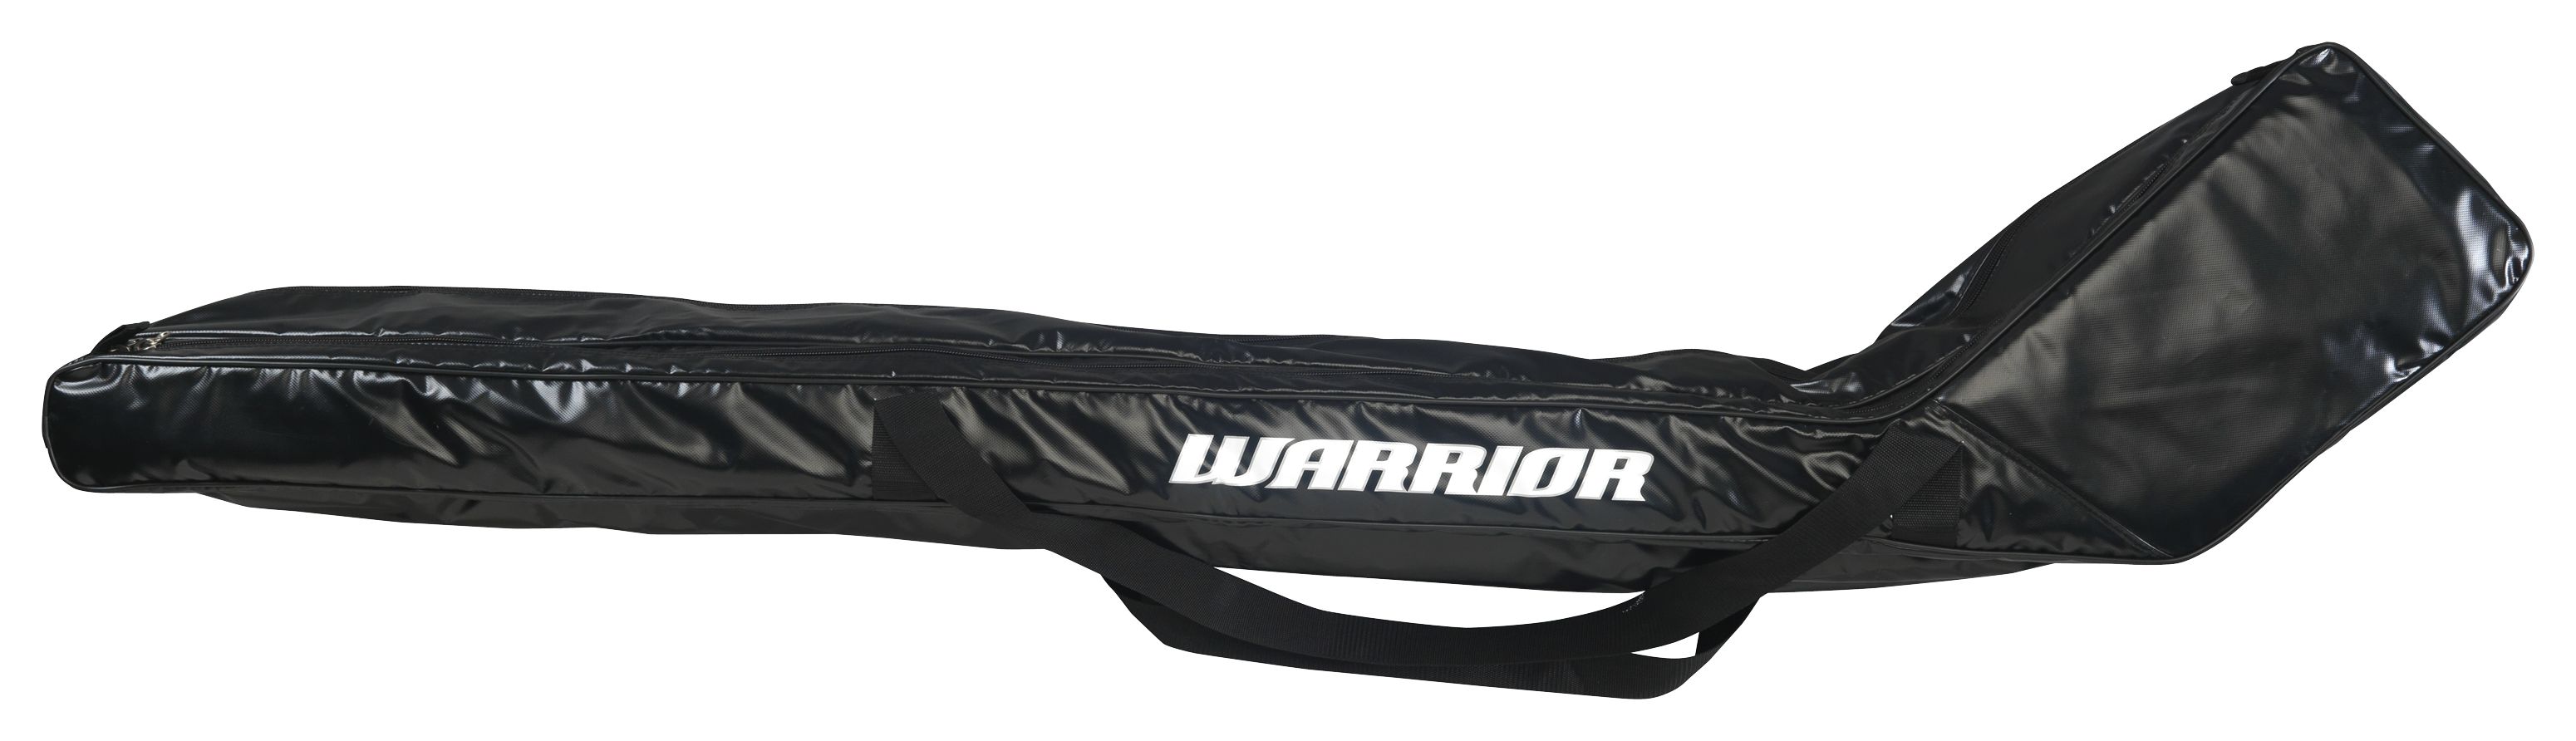 Warrior Team Stick Bag, Black with White image number 1